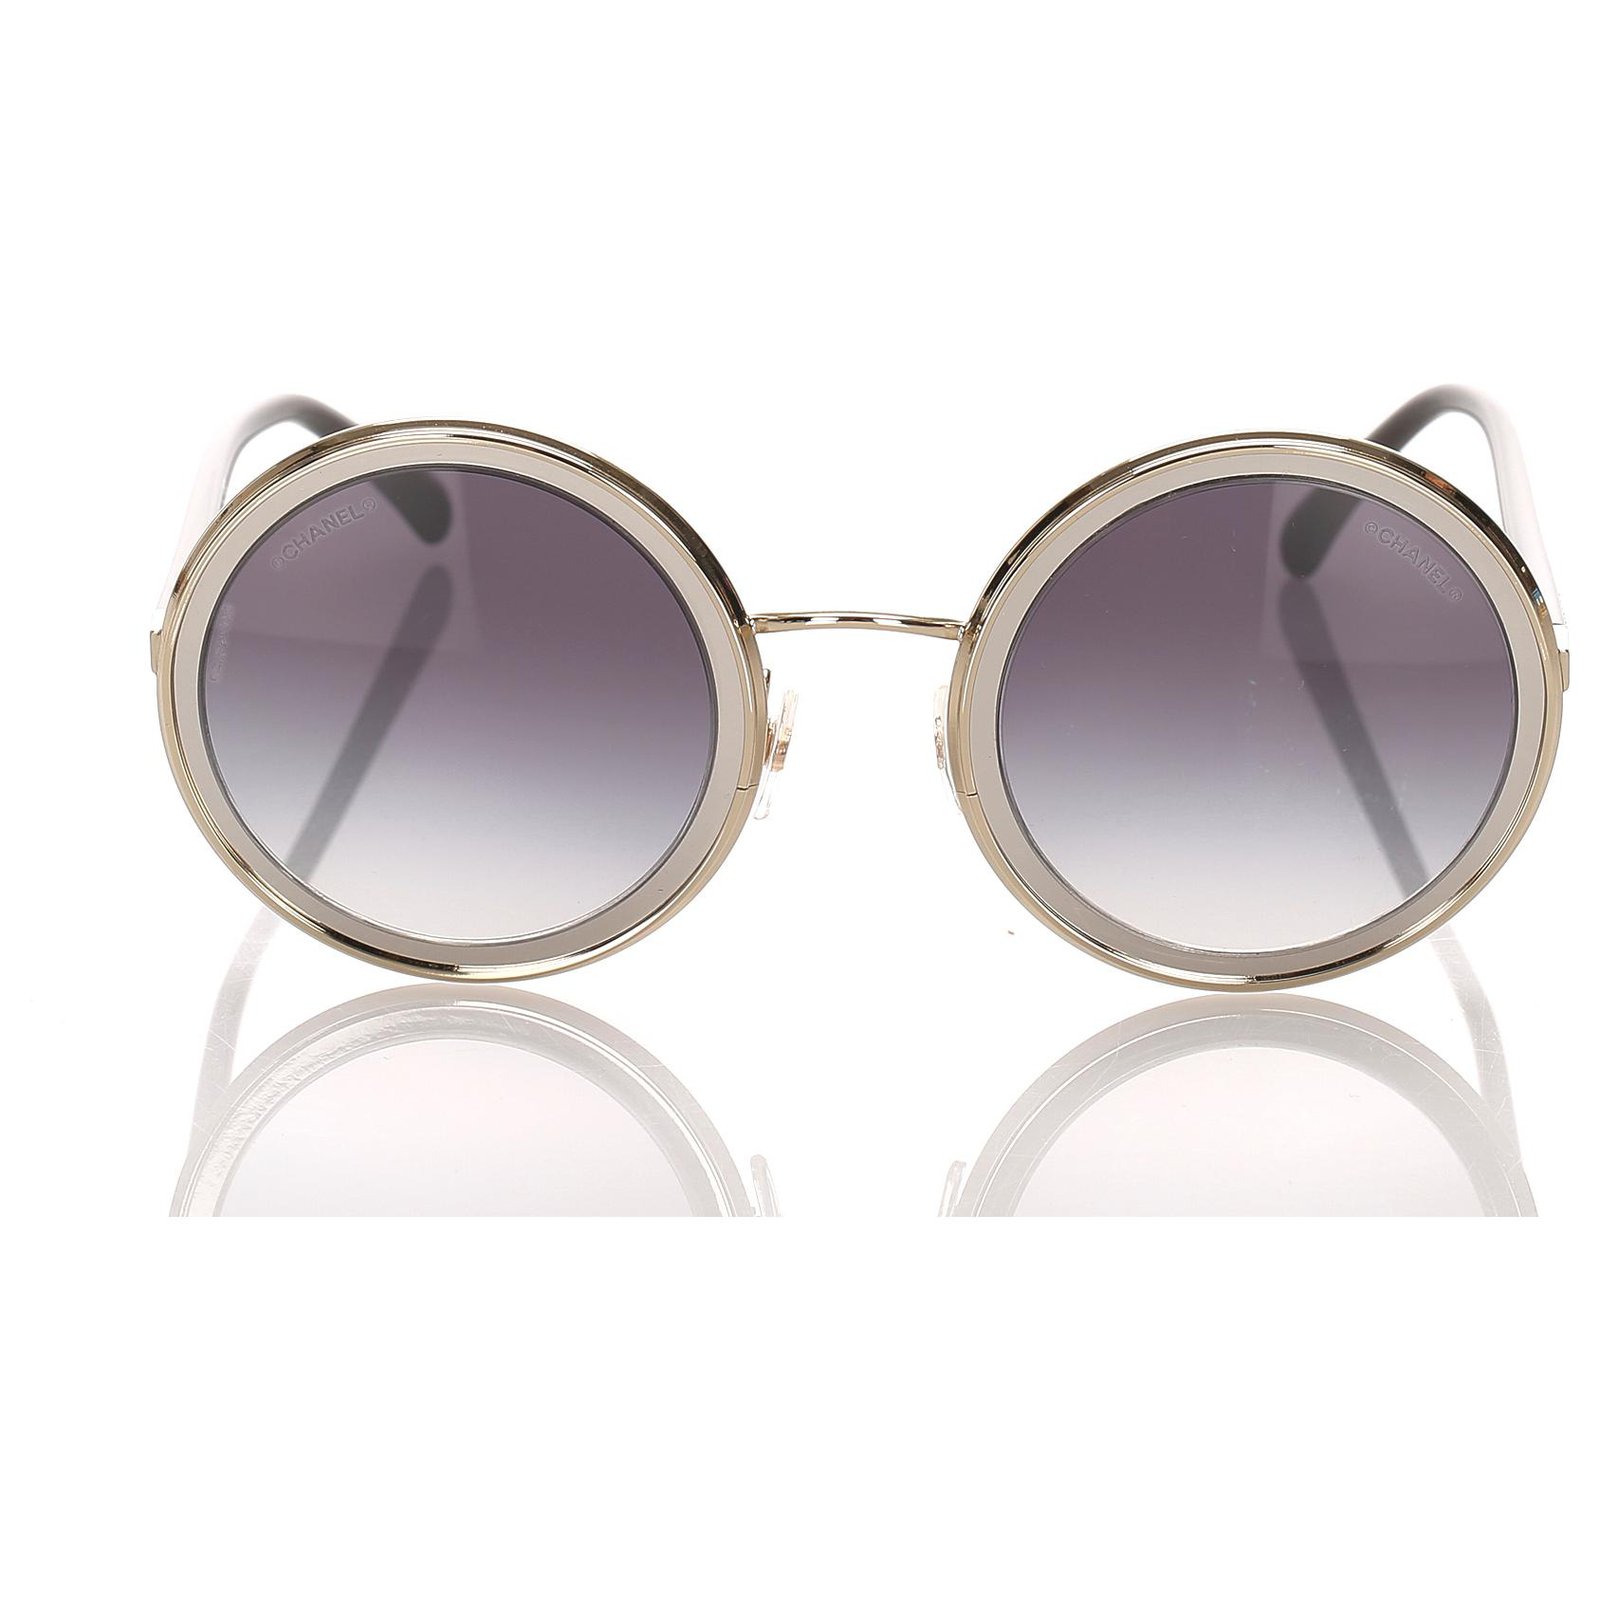 chanel logo round sunglasses